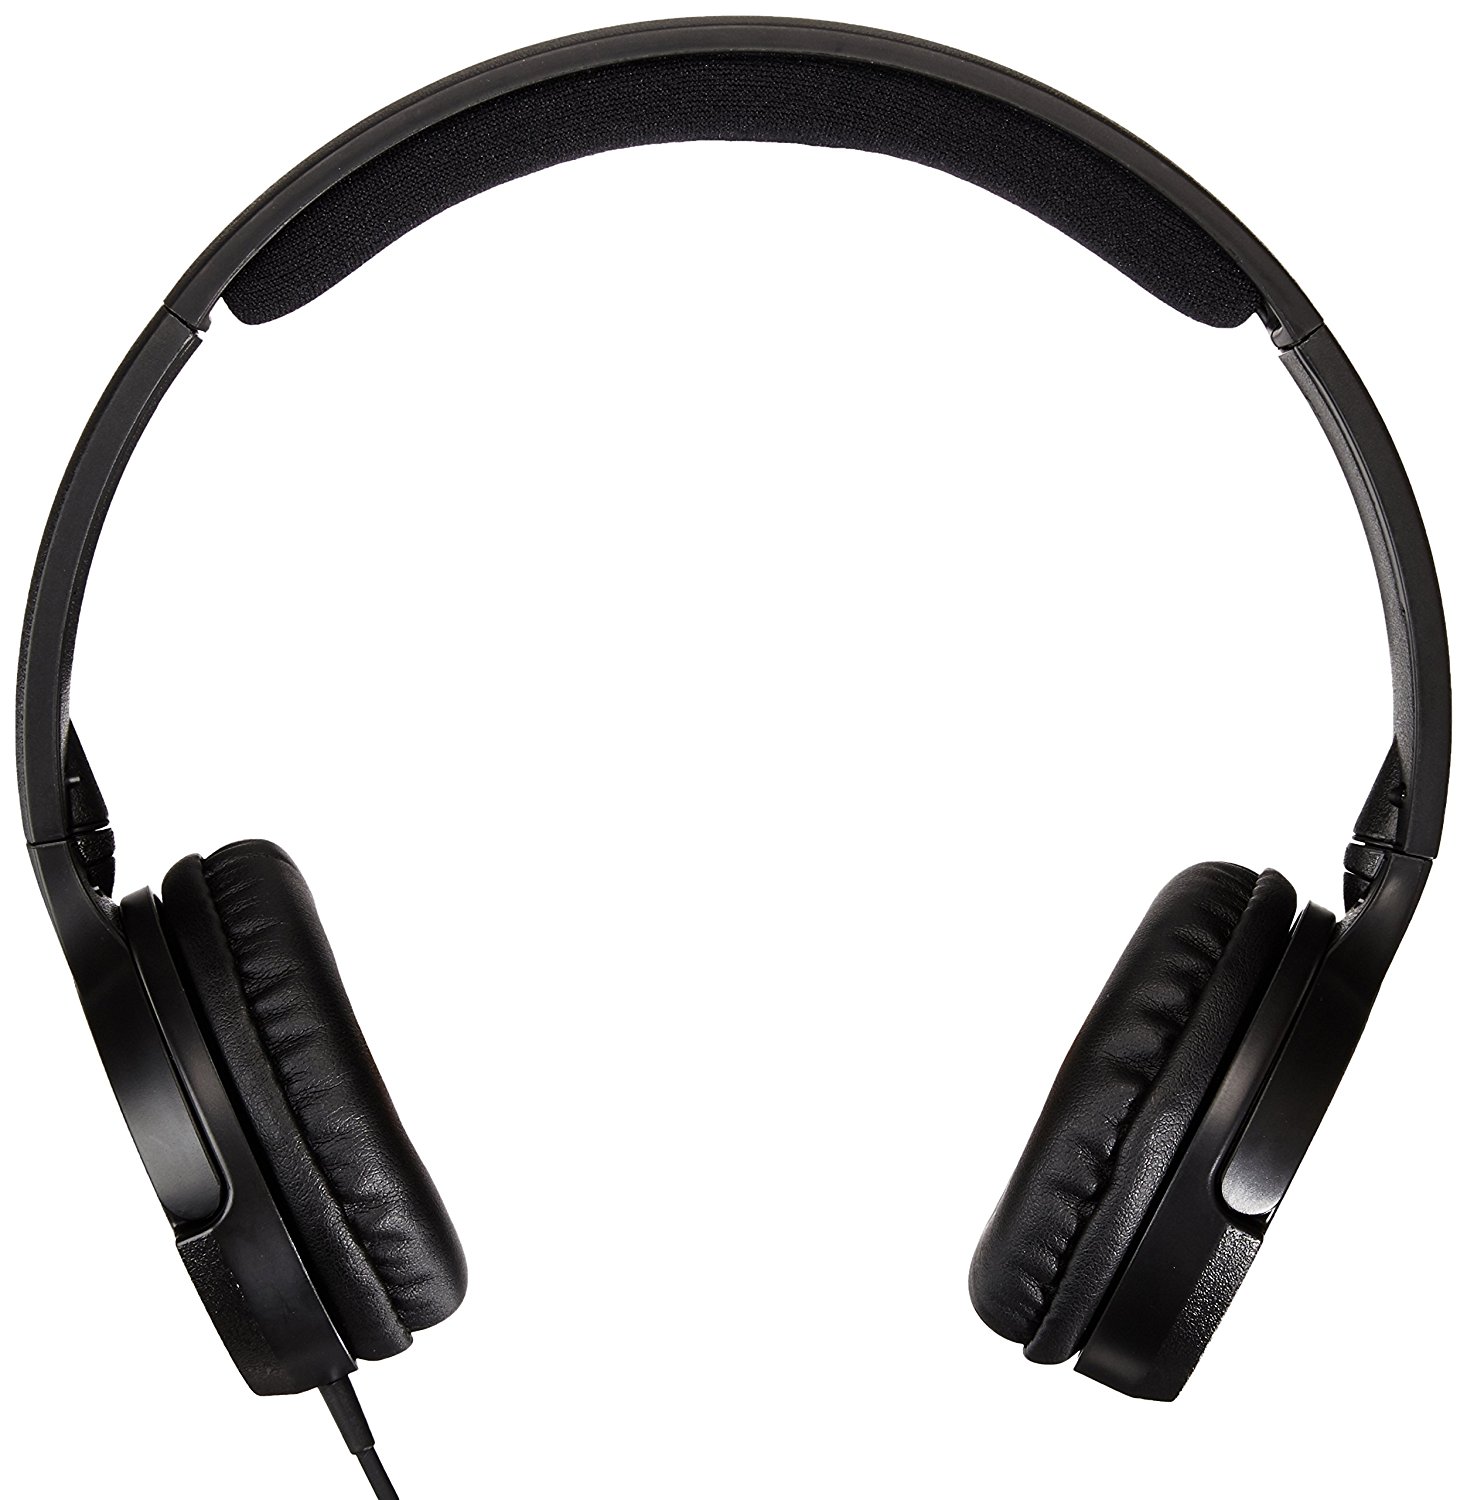 Amazon.com: AmazonBasics Lightweight On-Ear Headphones - Black: Home ...